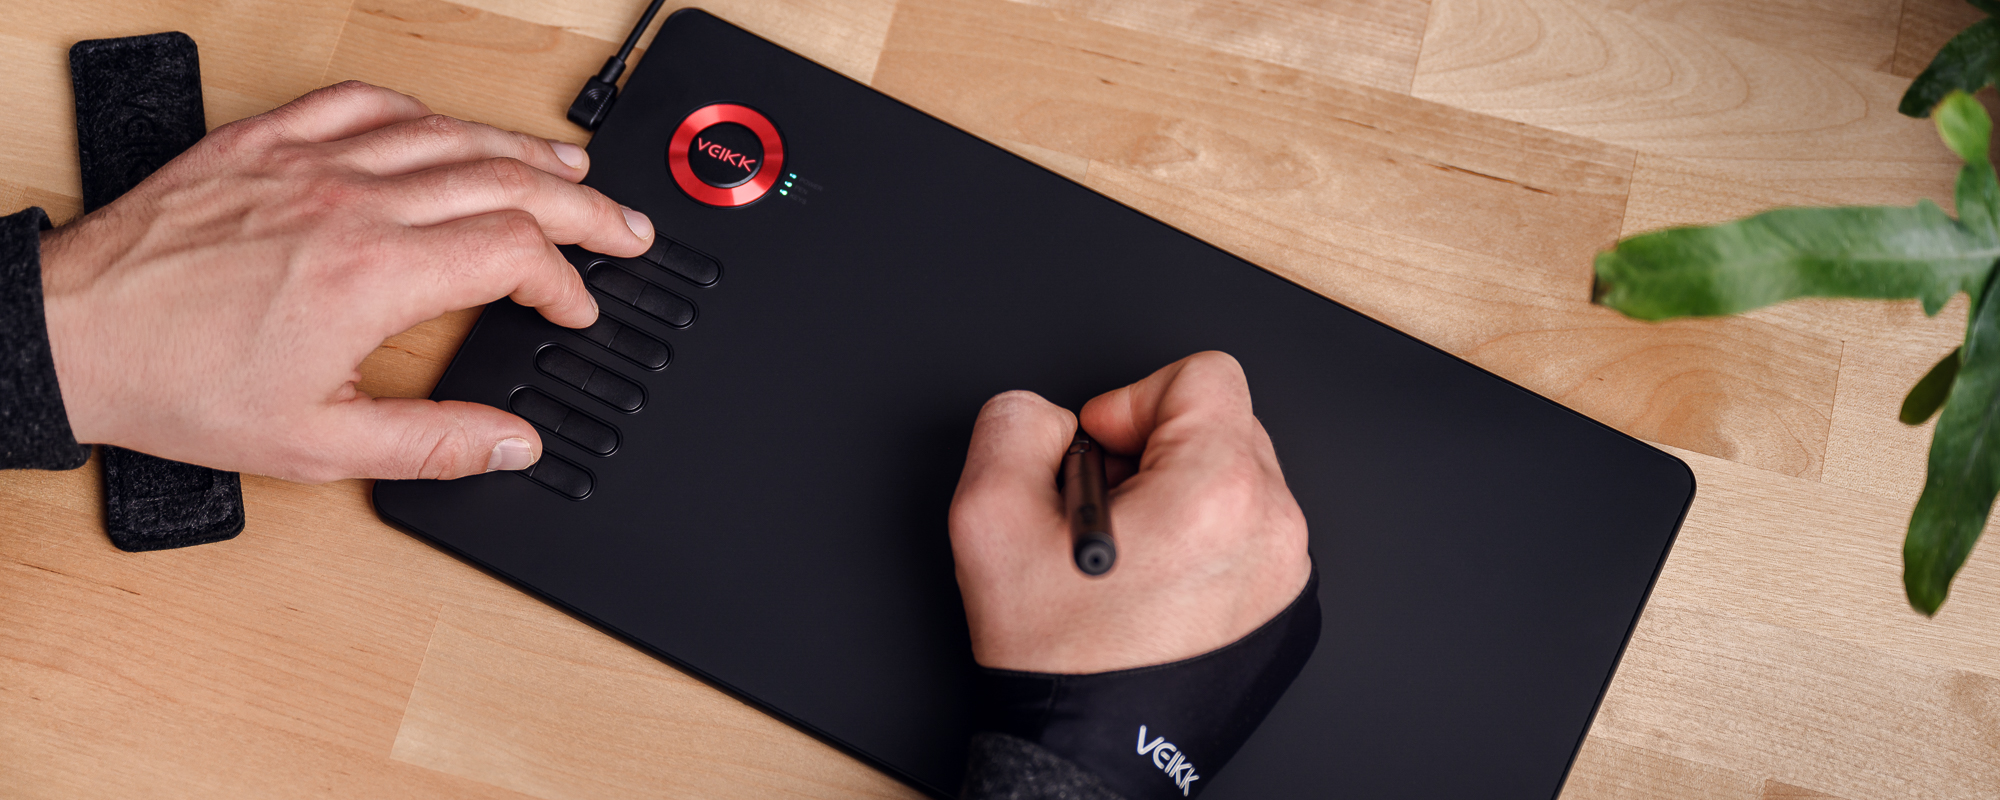 Photo - Veikk A15 Pro graphics tablet on light brown desk, man's left hand presses function key, right hand operates pen